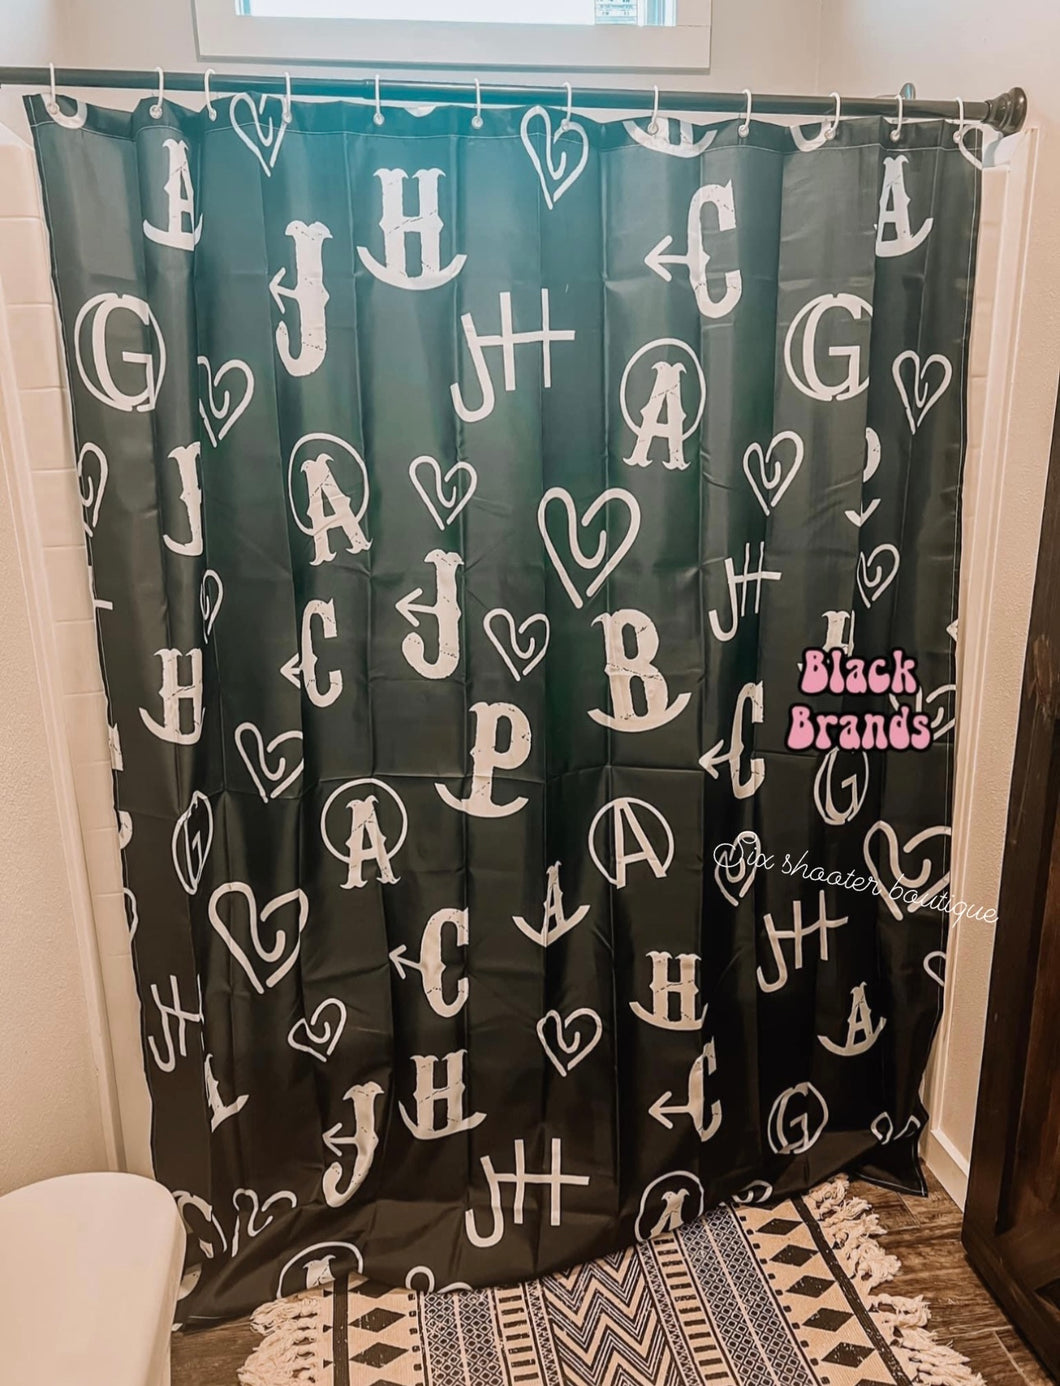 Black brands shower curtain